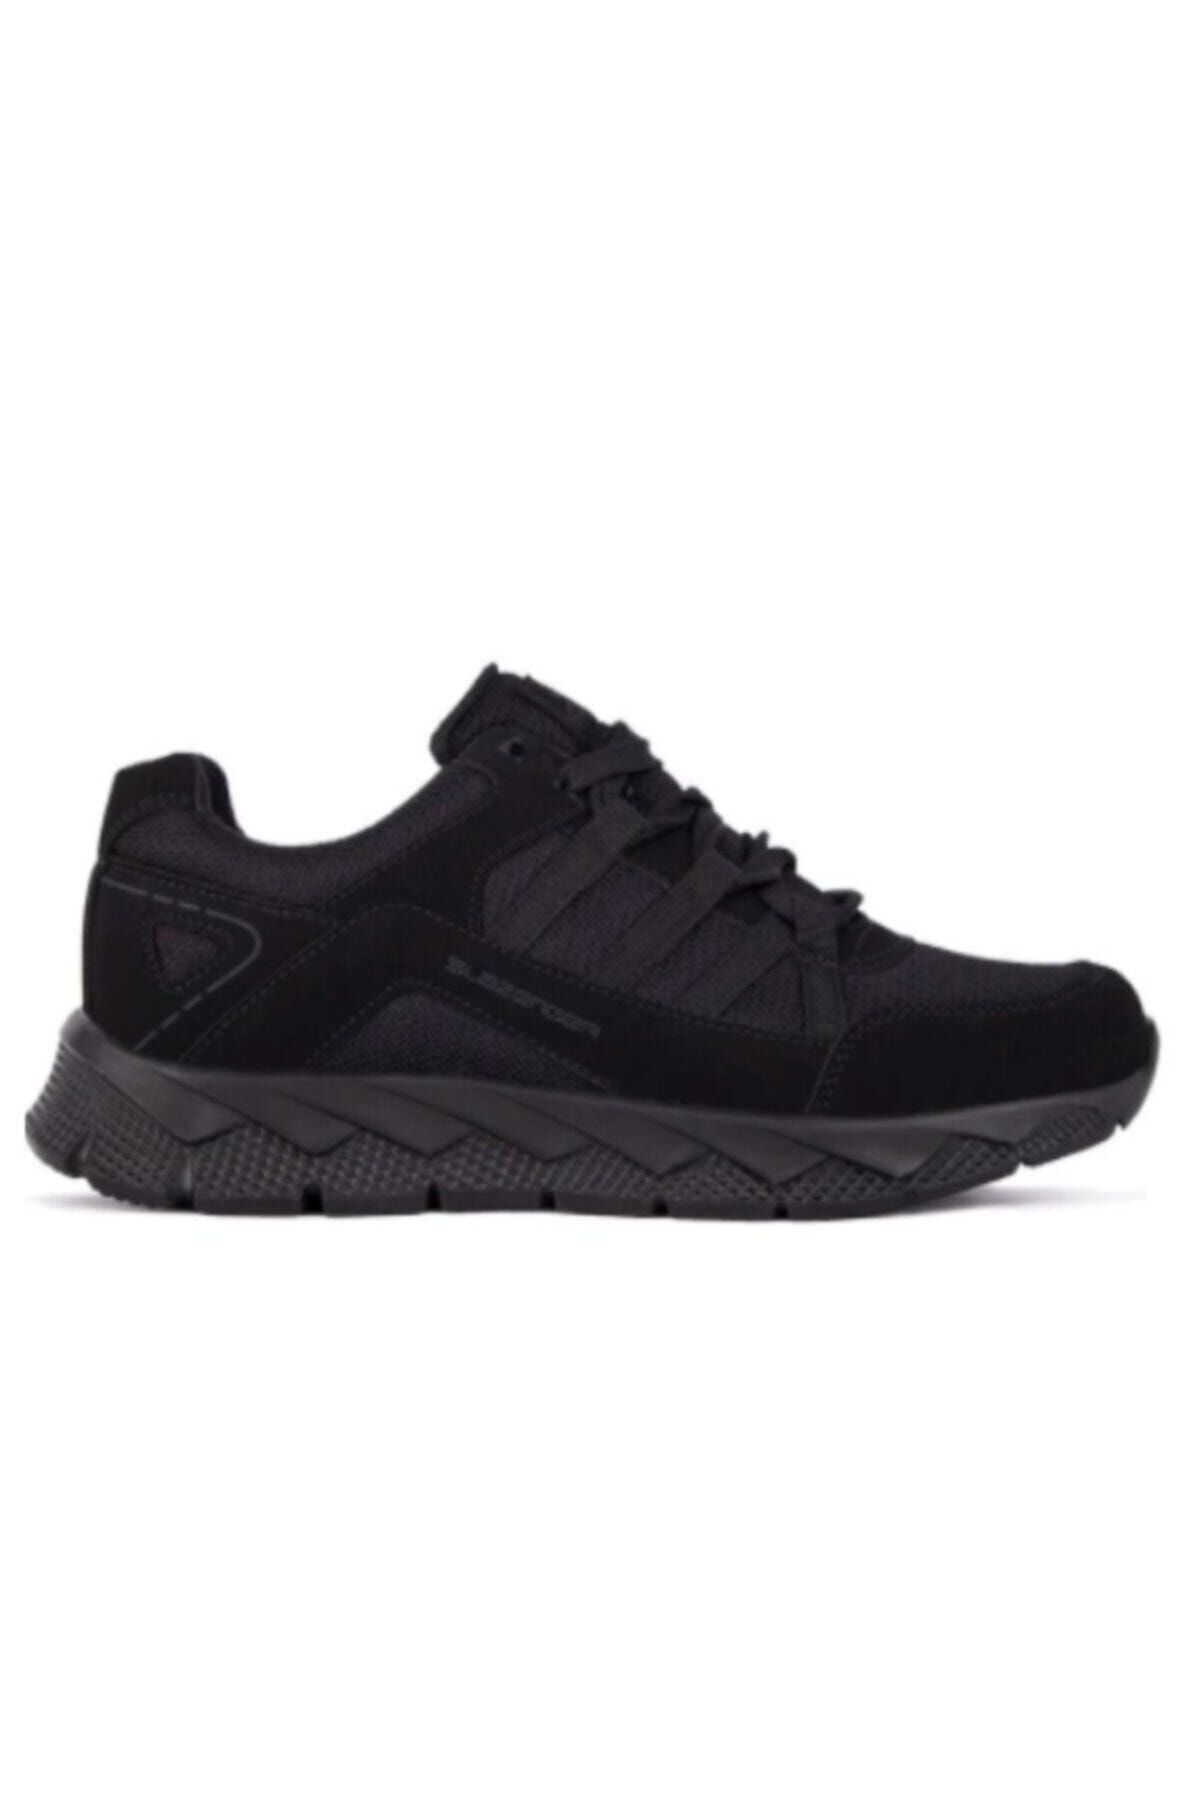 Slazenger Kobra Sneaker Unisex Ayakkabı Siyah / Siyah Sa11re049